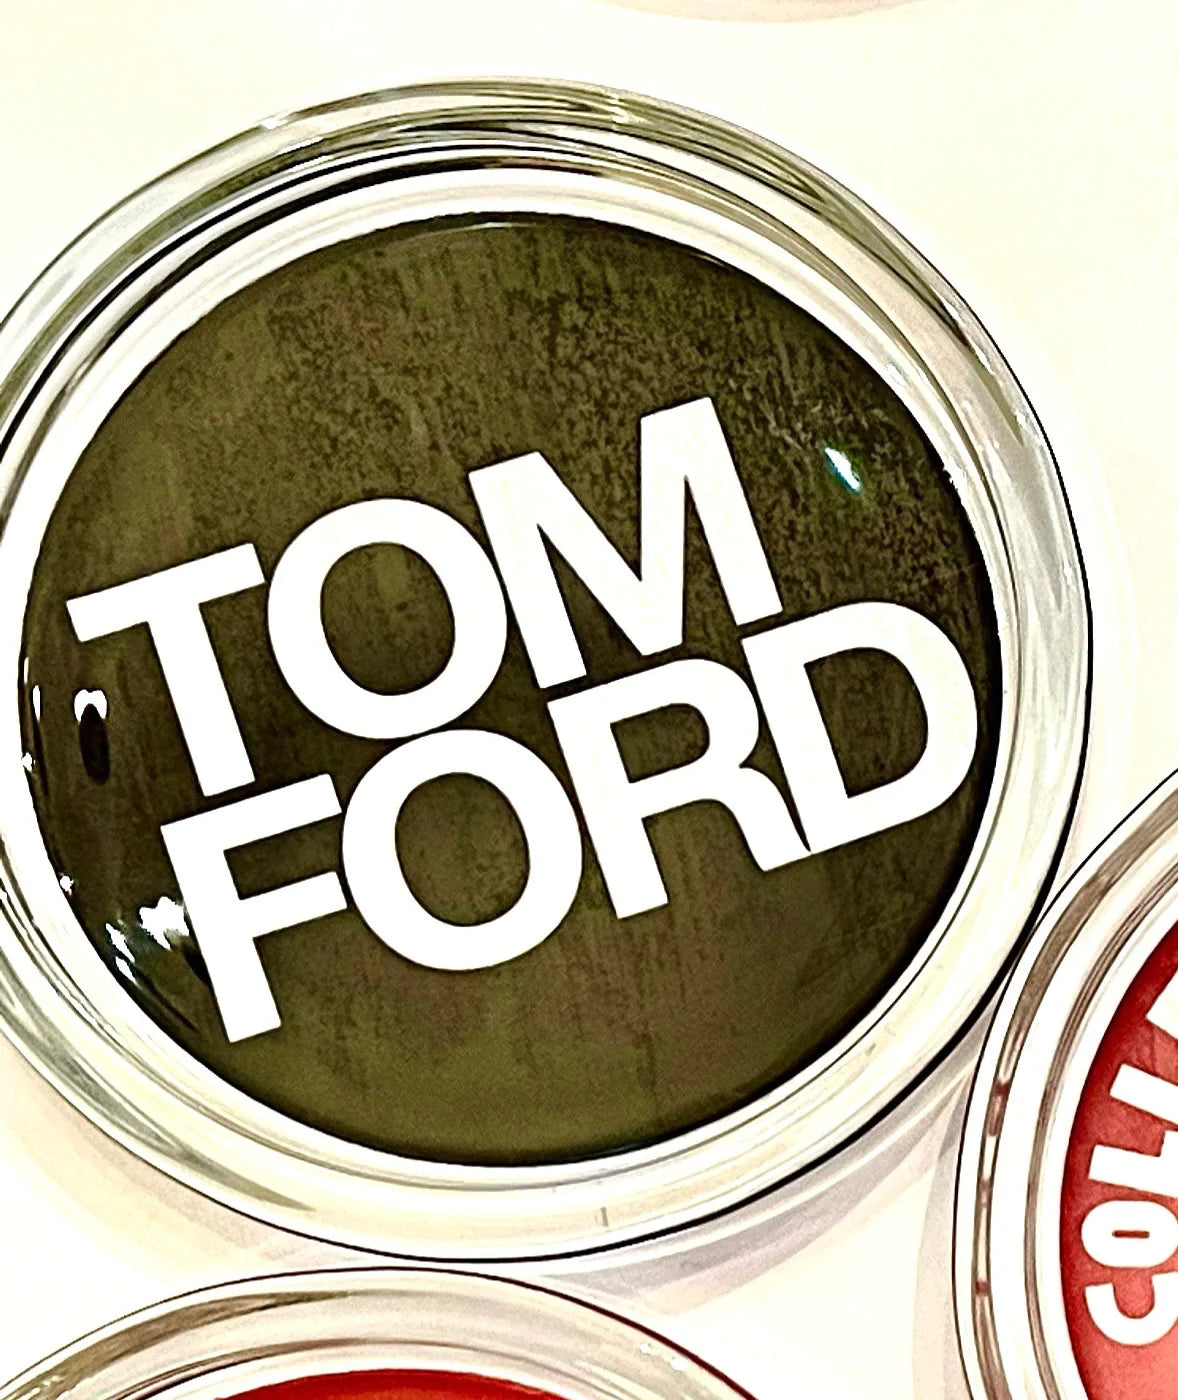 Tom Ford Glass Coaster/Trivet